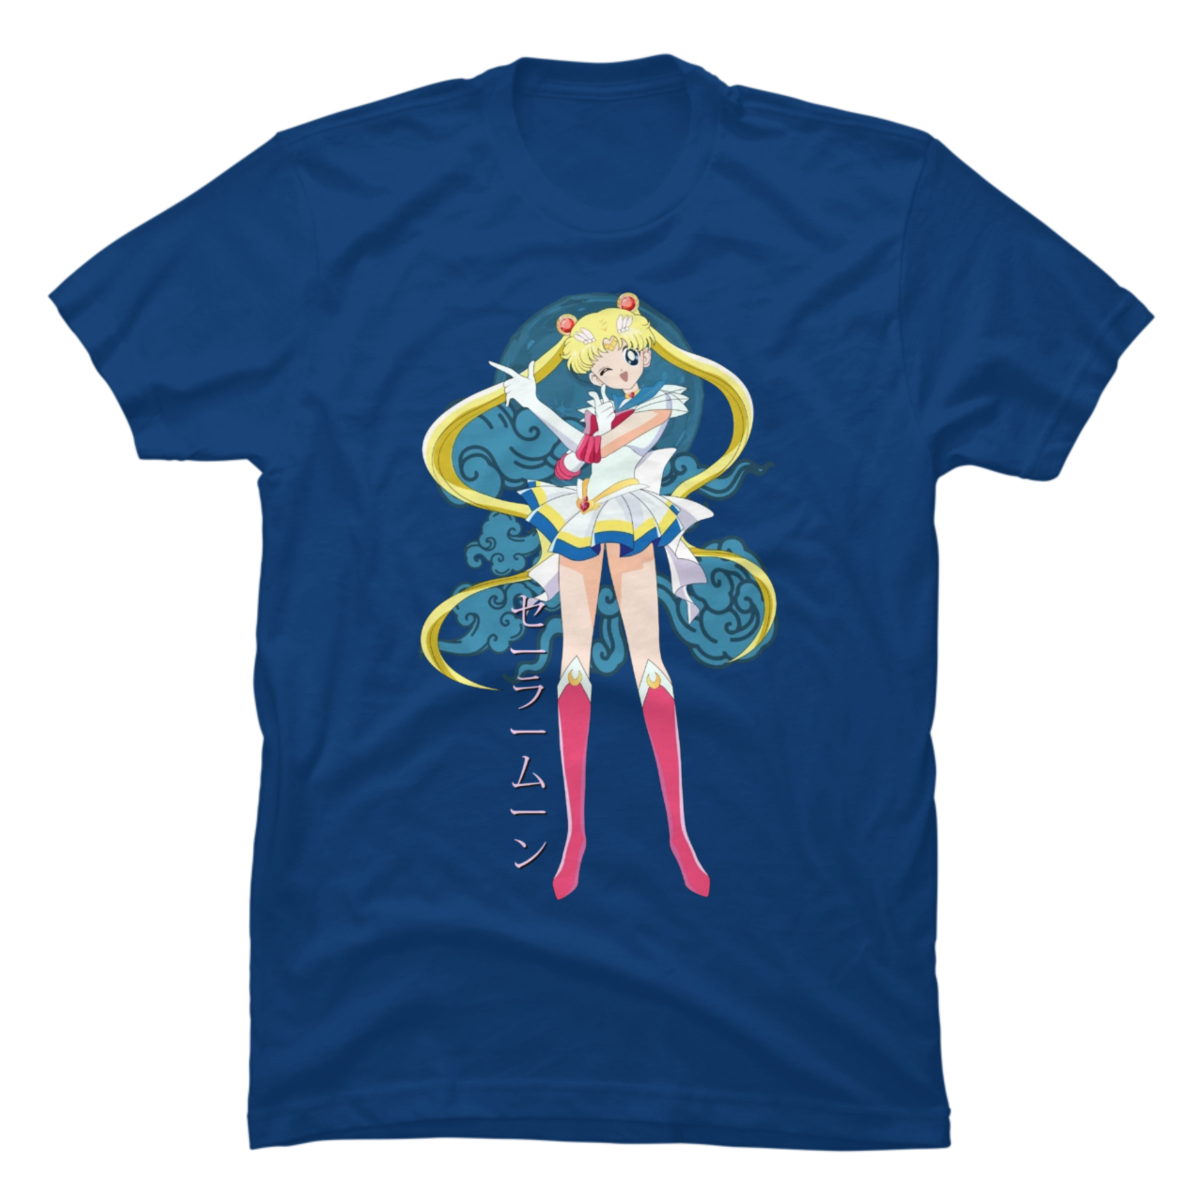 Sailor Moon Wink - Buy t-shirt designs